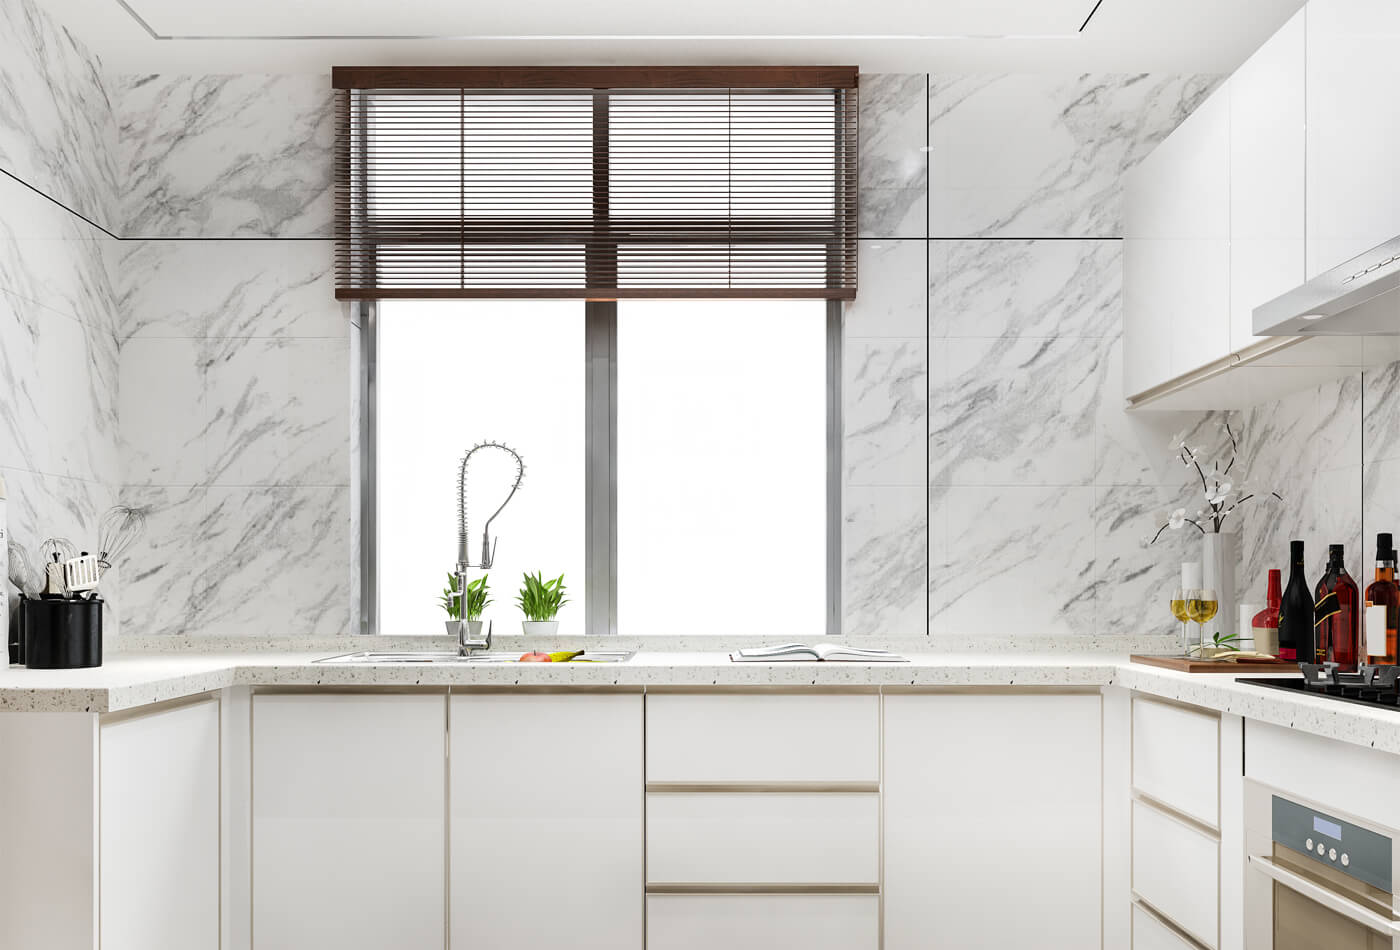 500+ Kitchen Backsplash Tile Collection For Your Upcoming Home Renovation